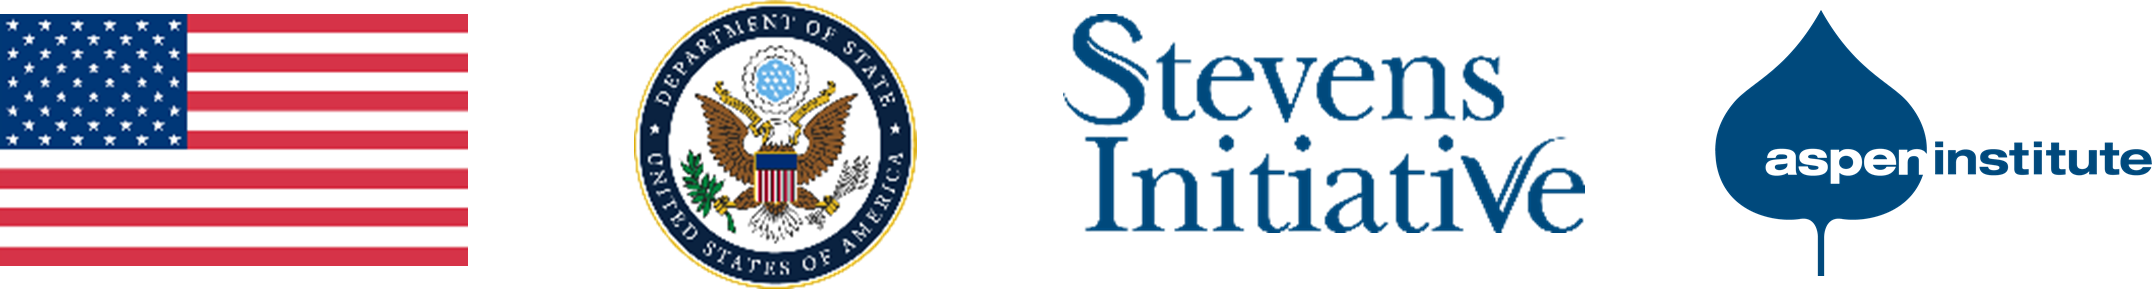 US flag, Department of State logo, Stevens Initiative logo, Aspen Institute logo